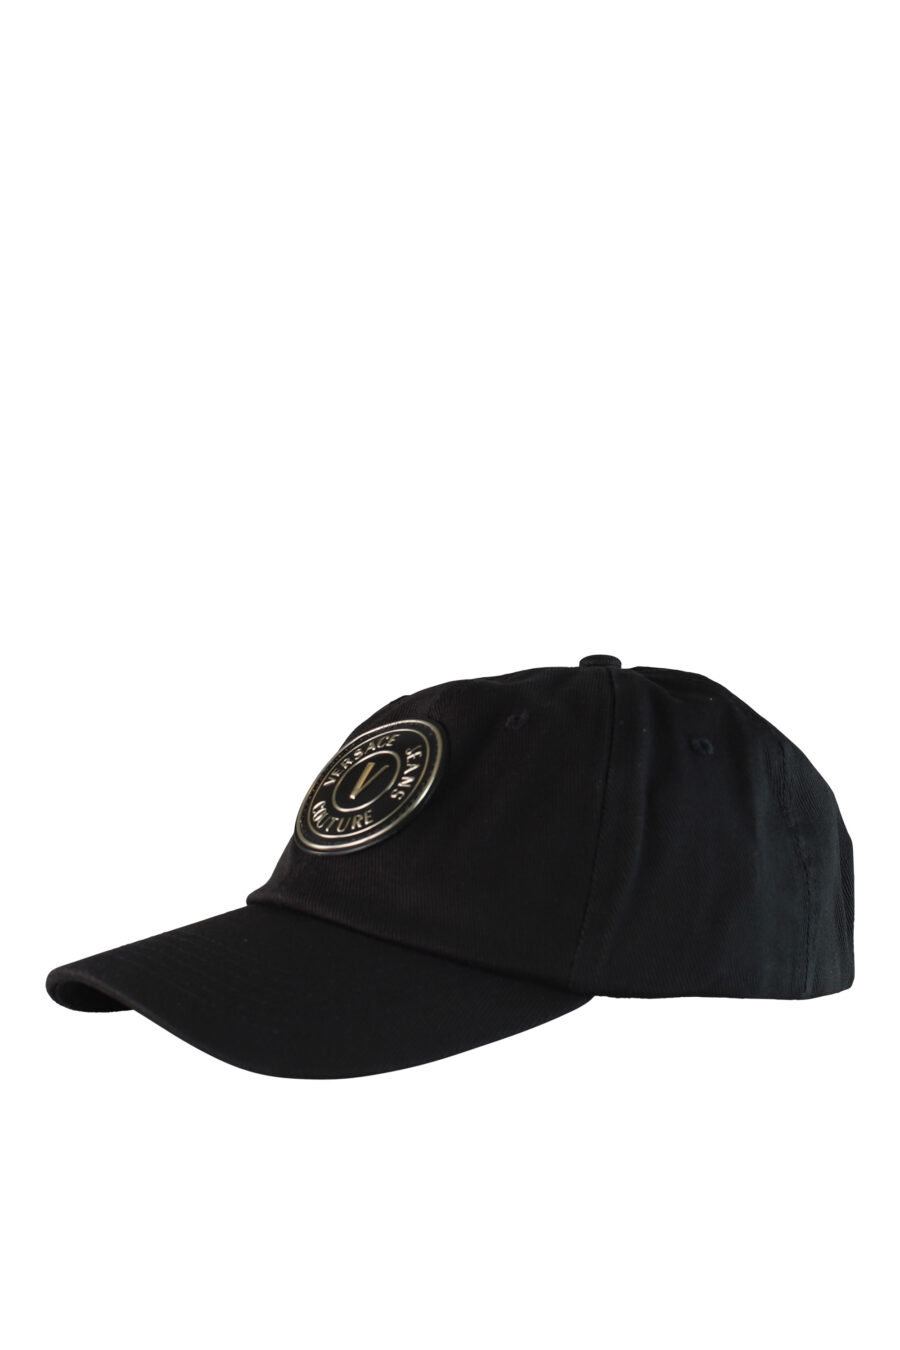 Schwarze Kappe mit kreisförmigem Logo in Gold - IMG 0503